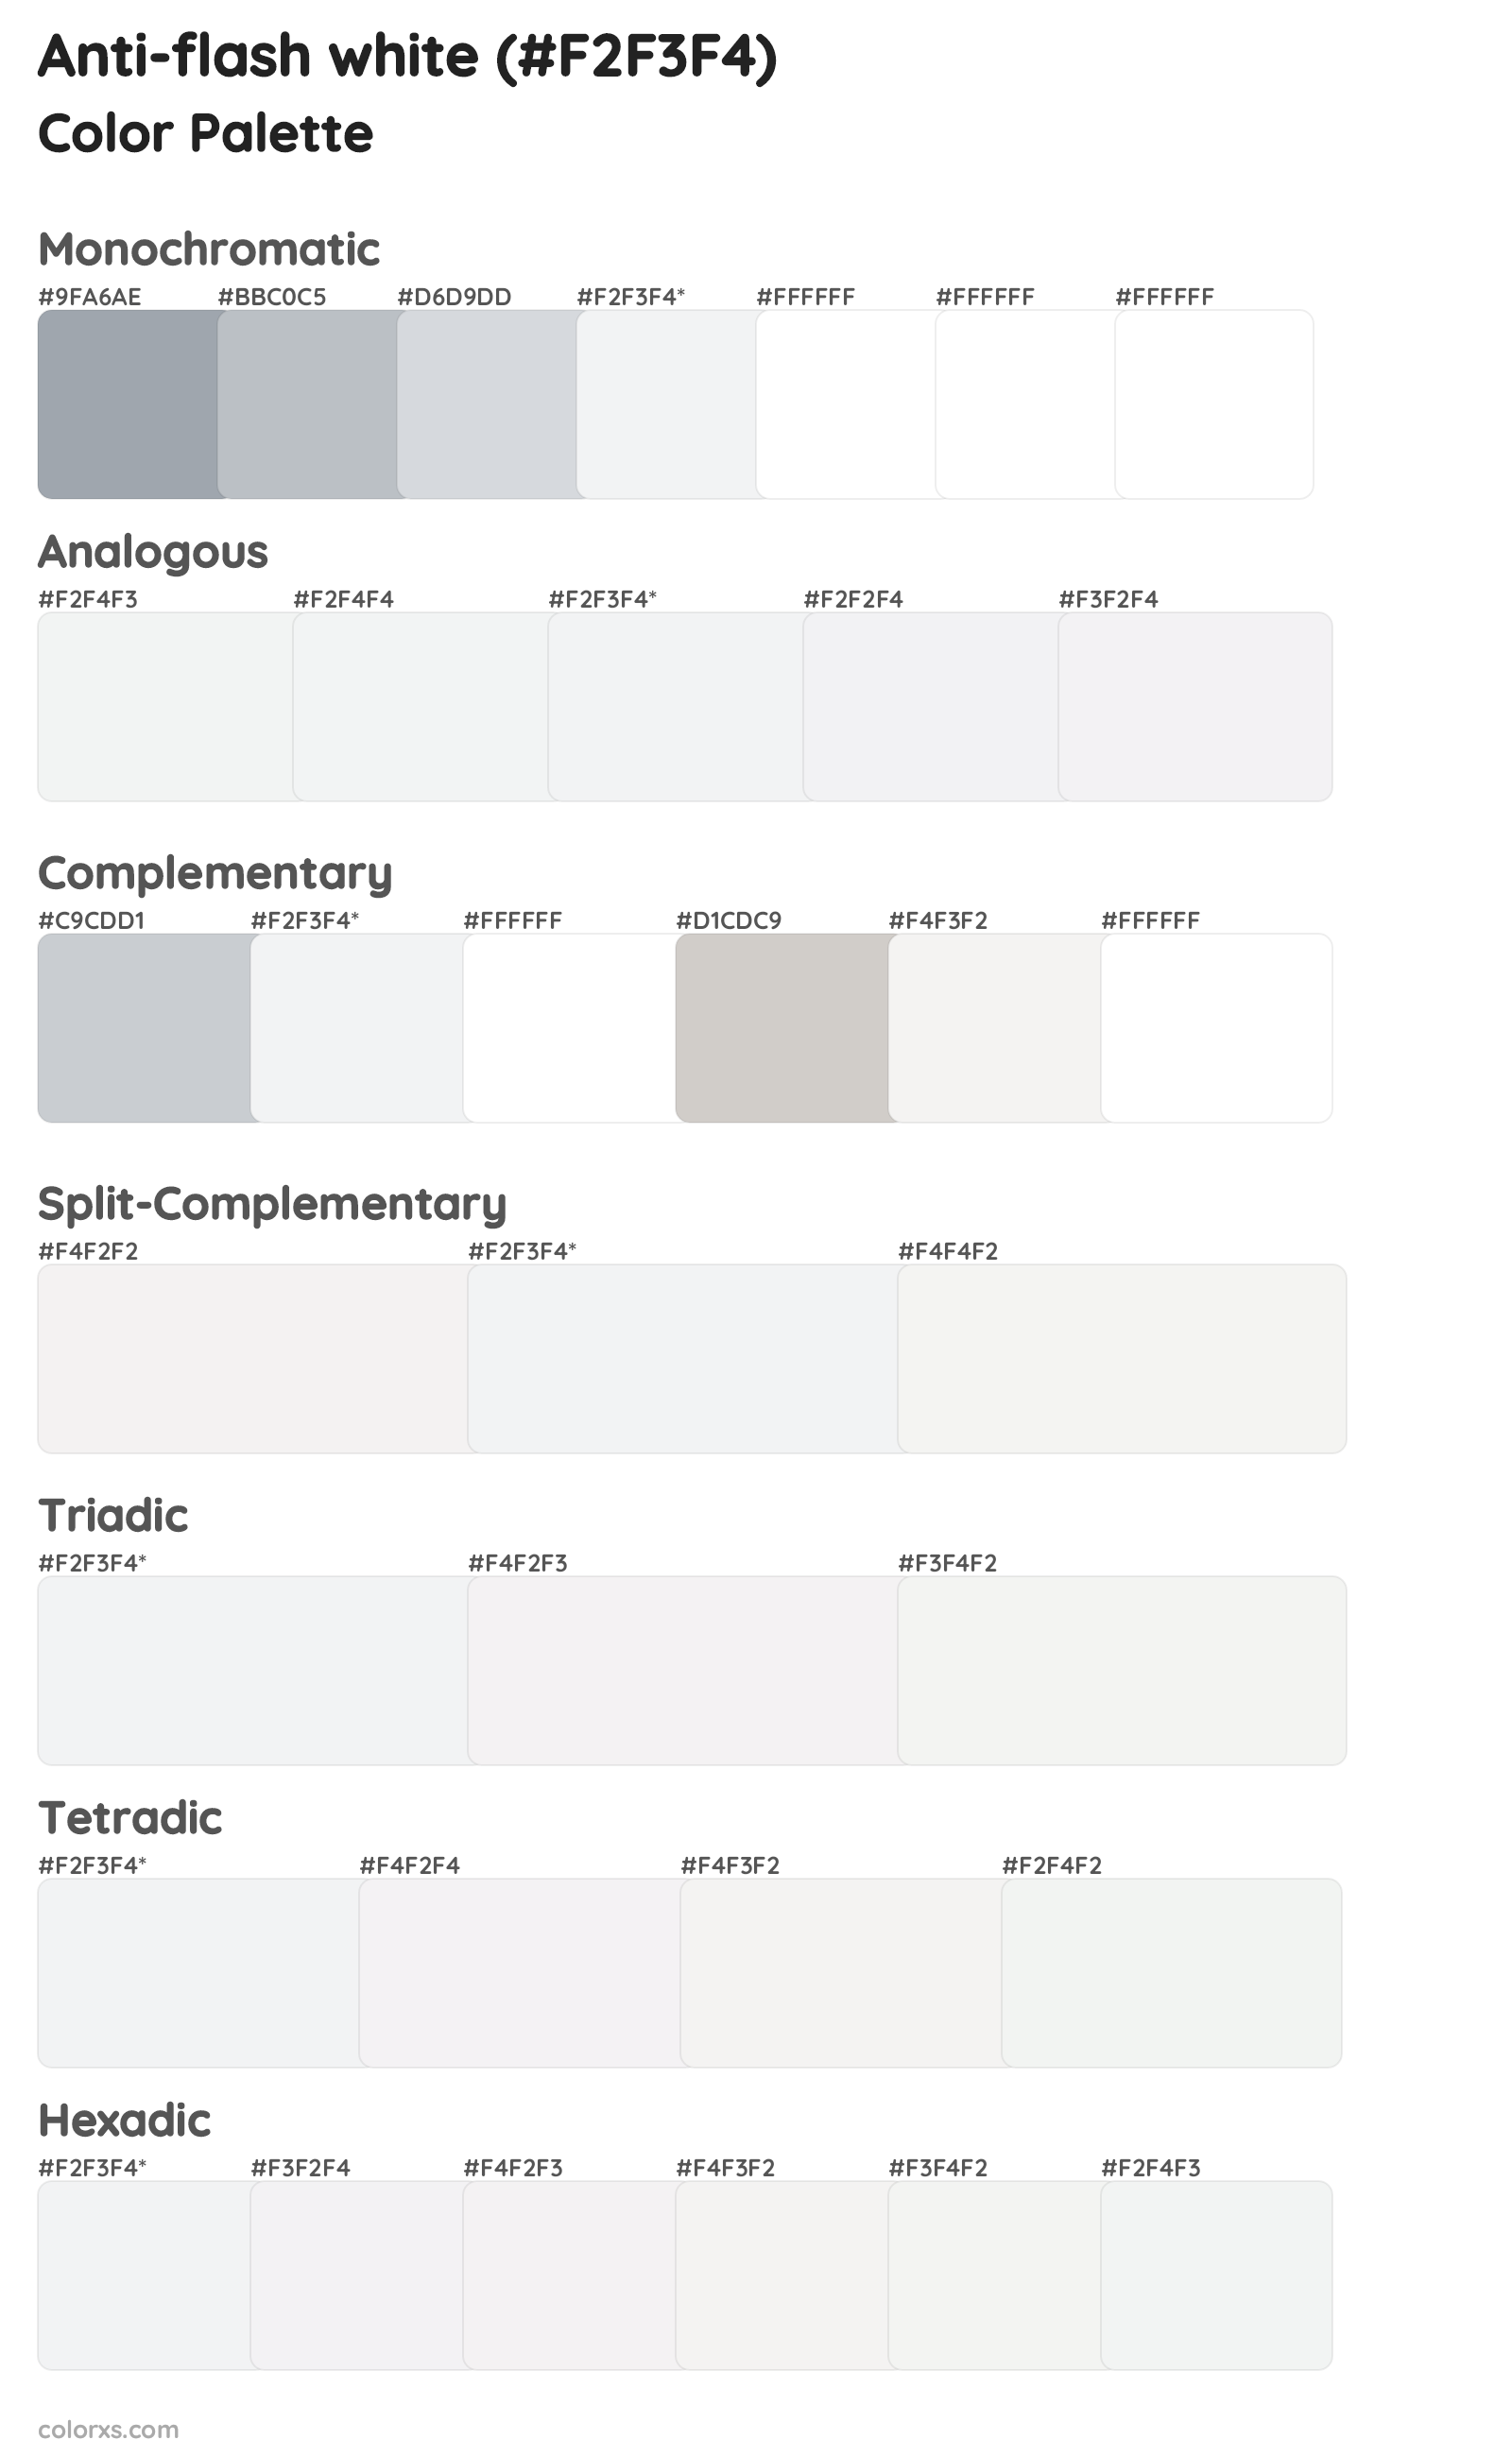 Anti-flash white Color Scheme Palettes